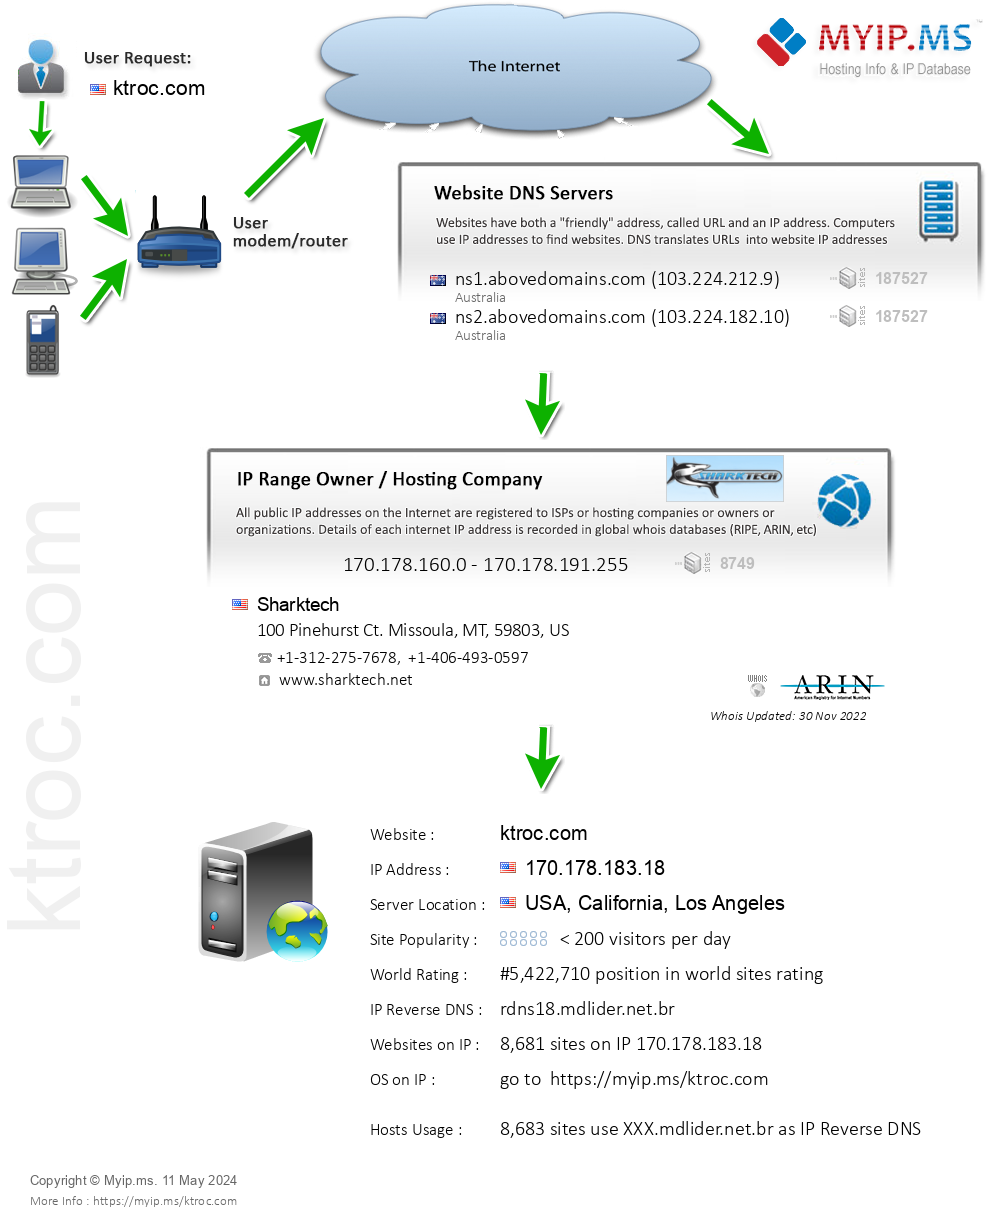 Ktroc.com - Website Hosting Visual IP Diagram